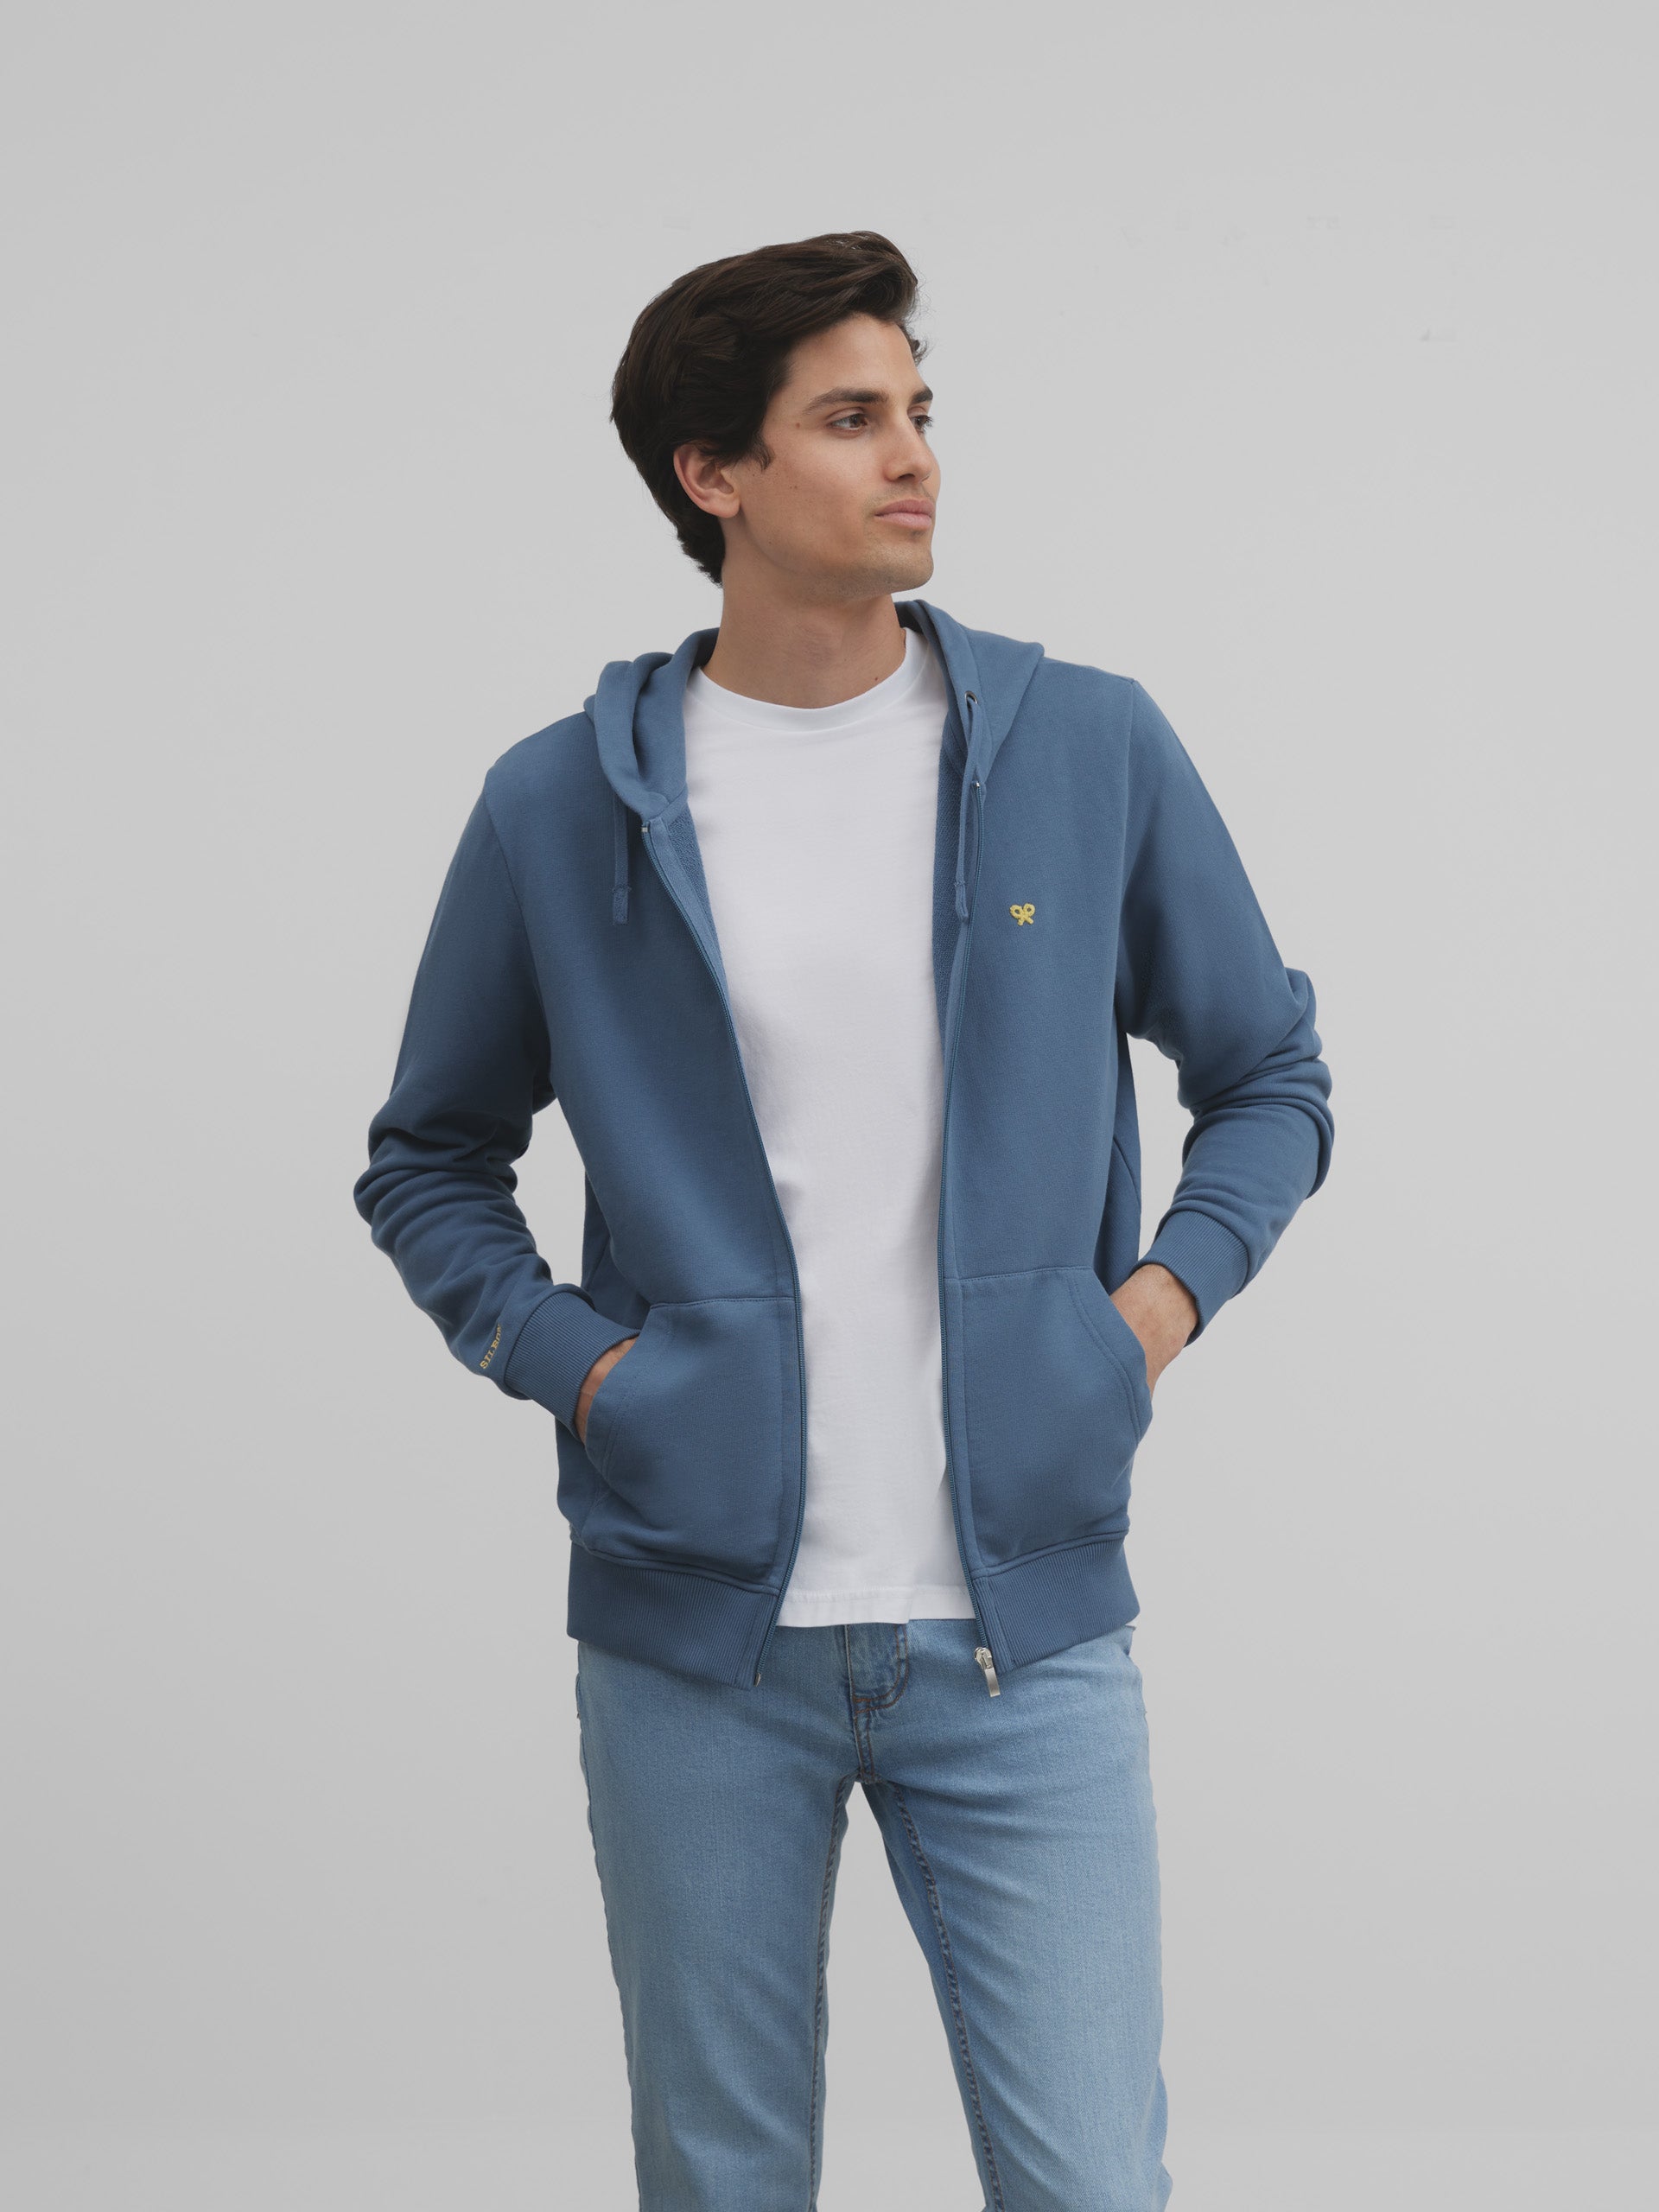 Silbon hooded sweatshirt with indigo blue mini logo